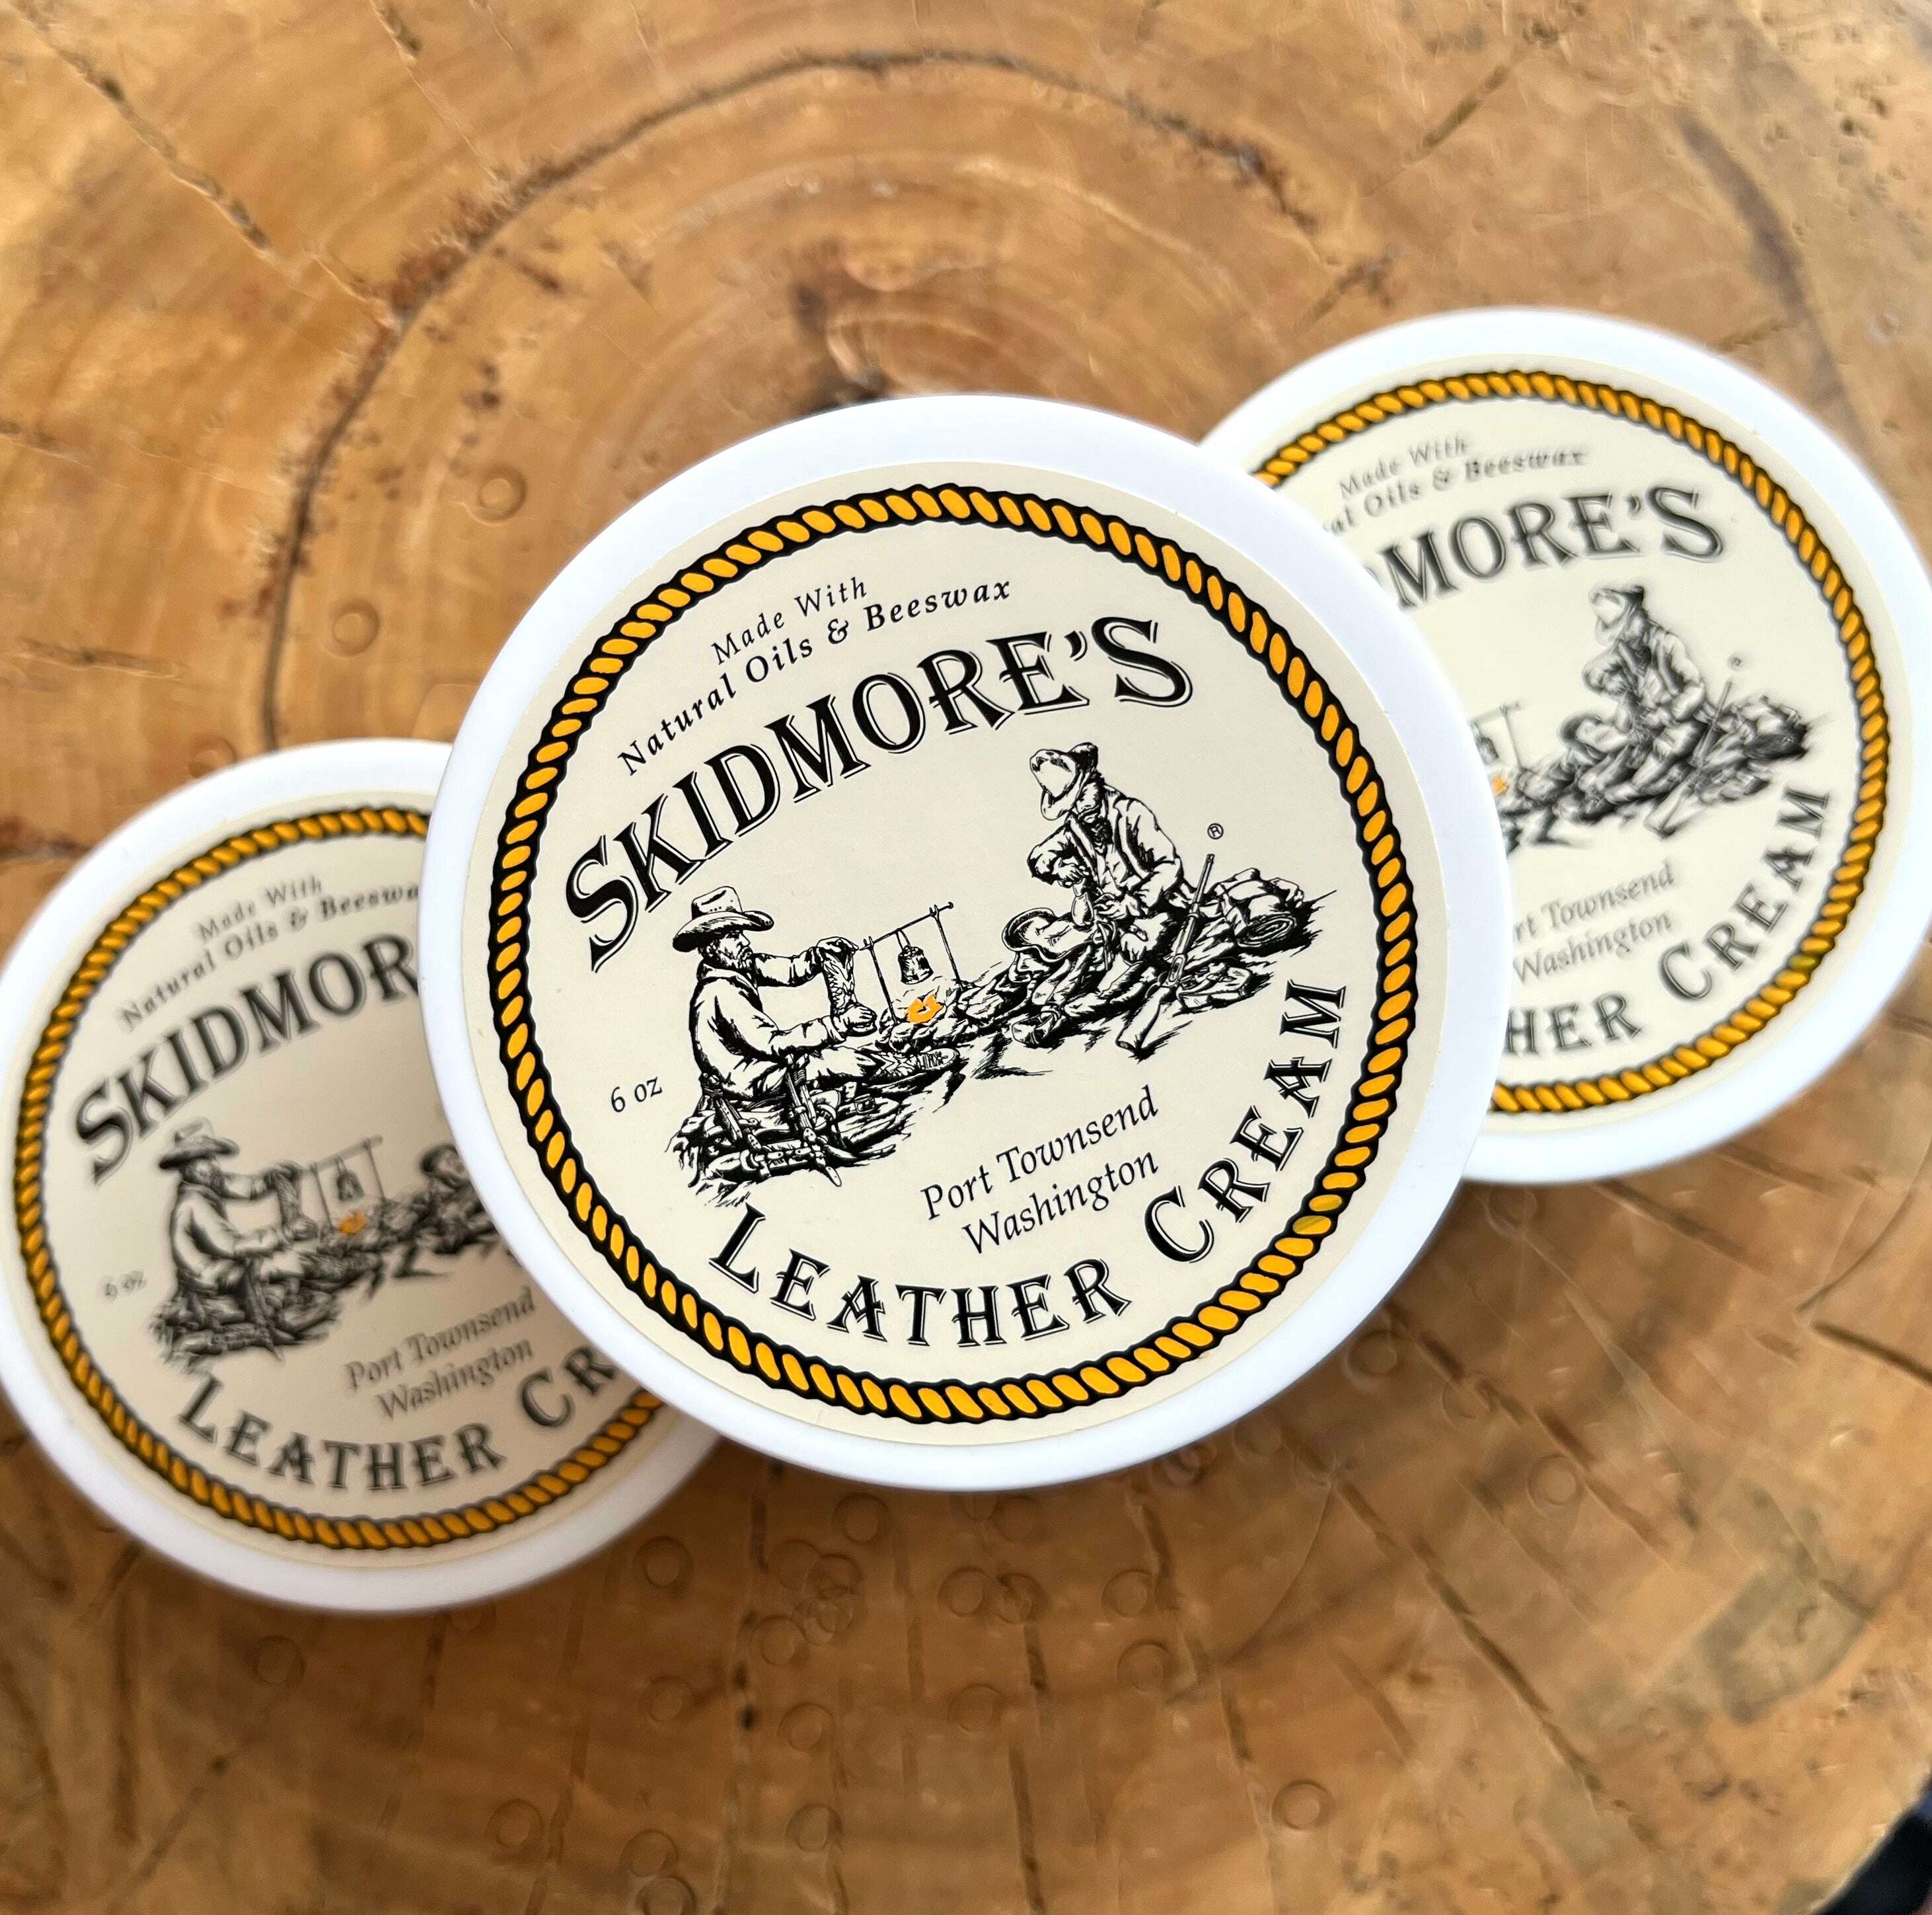 Calabasas Saddlery - Skidmore's Leather Cream 6oz.